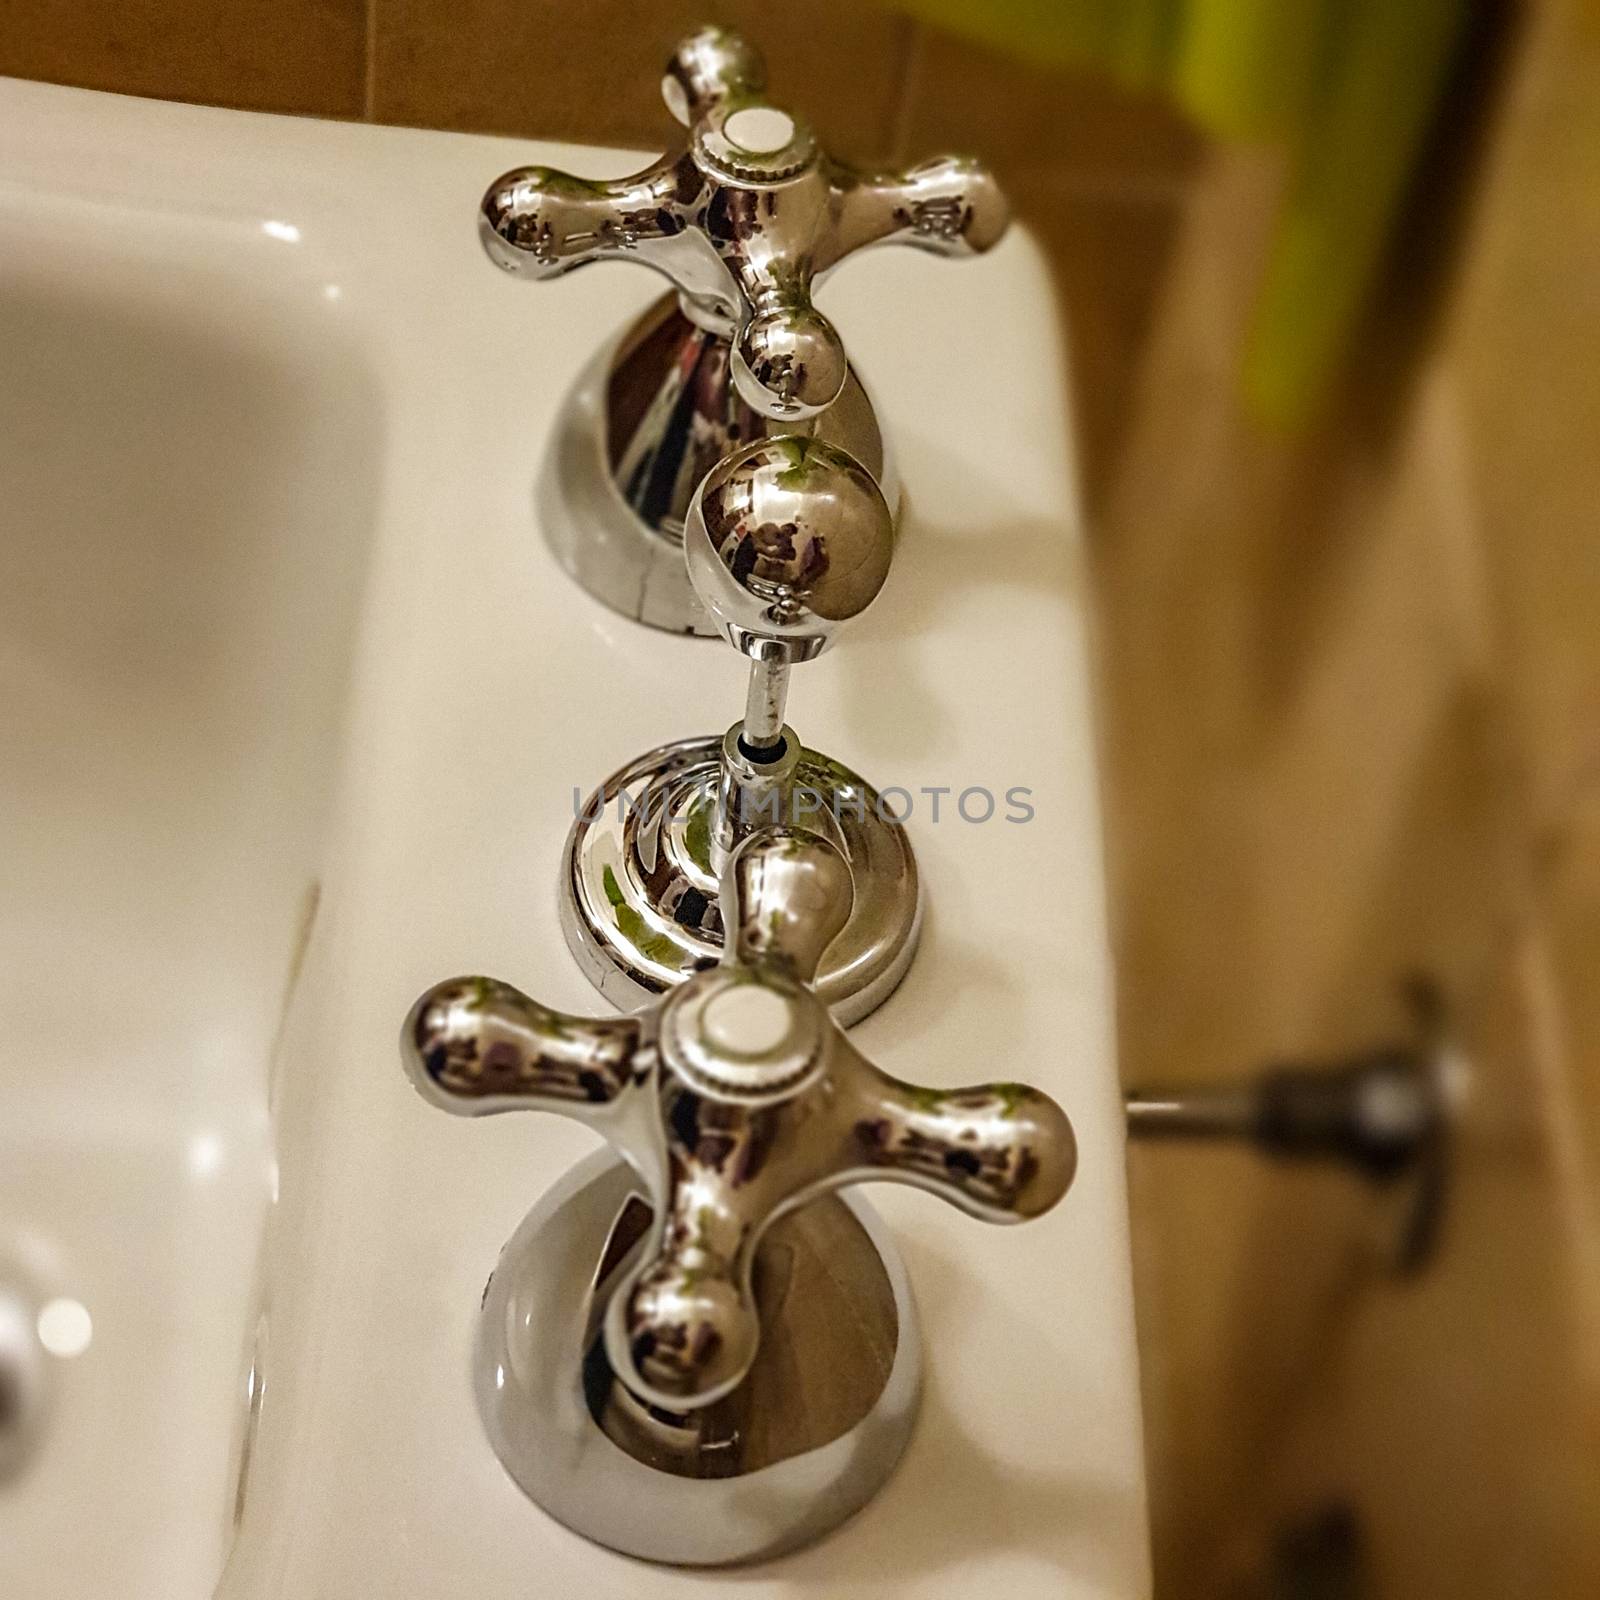 poor bathroom sanitary taps